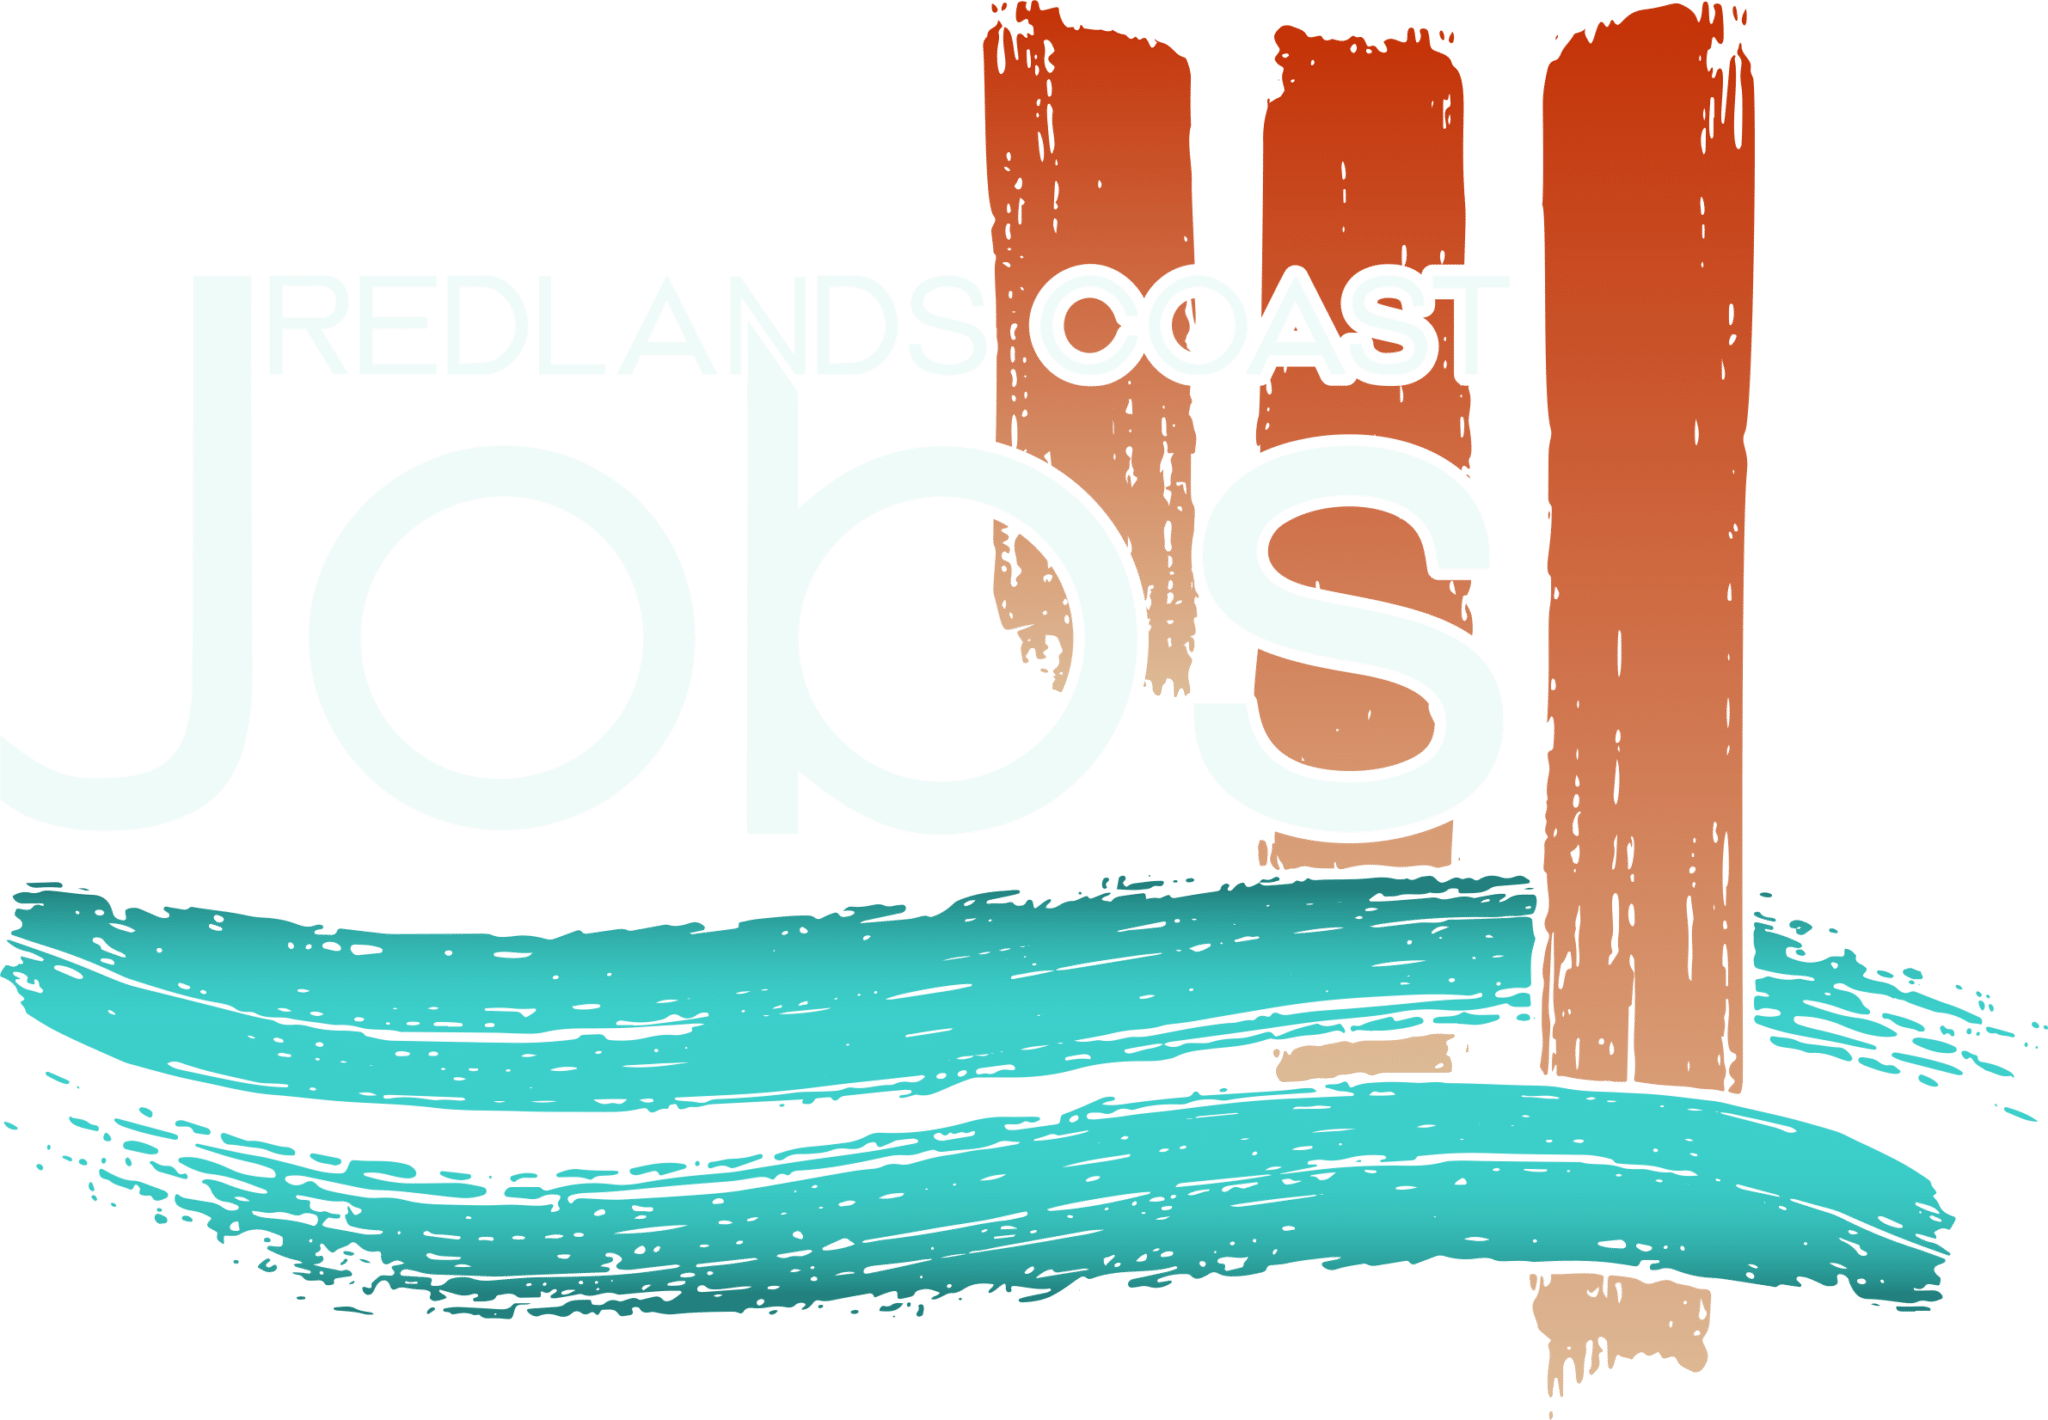 redlands coast jobs light